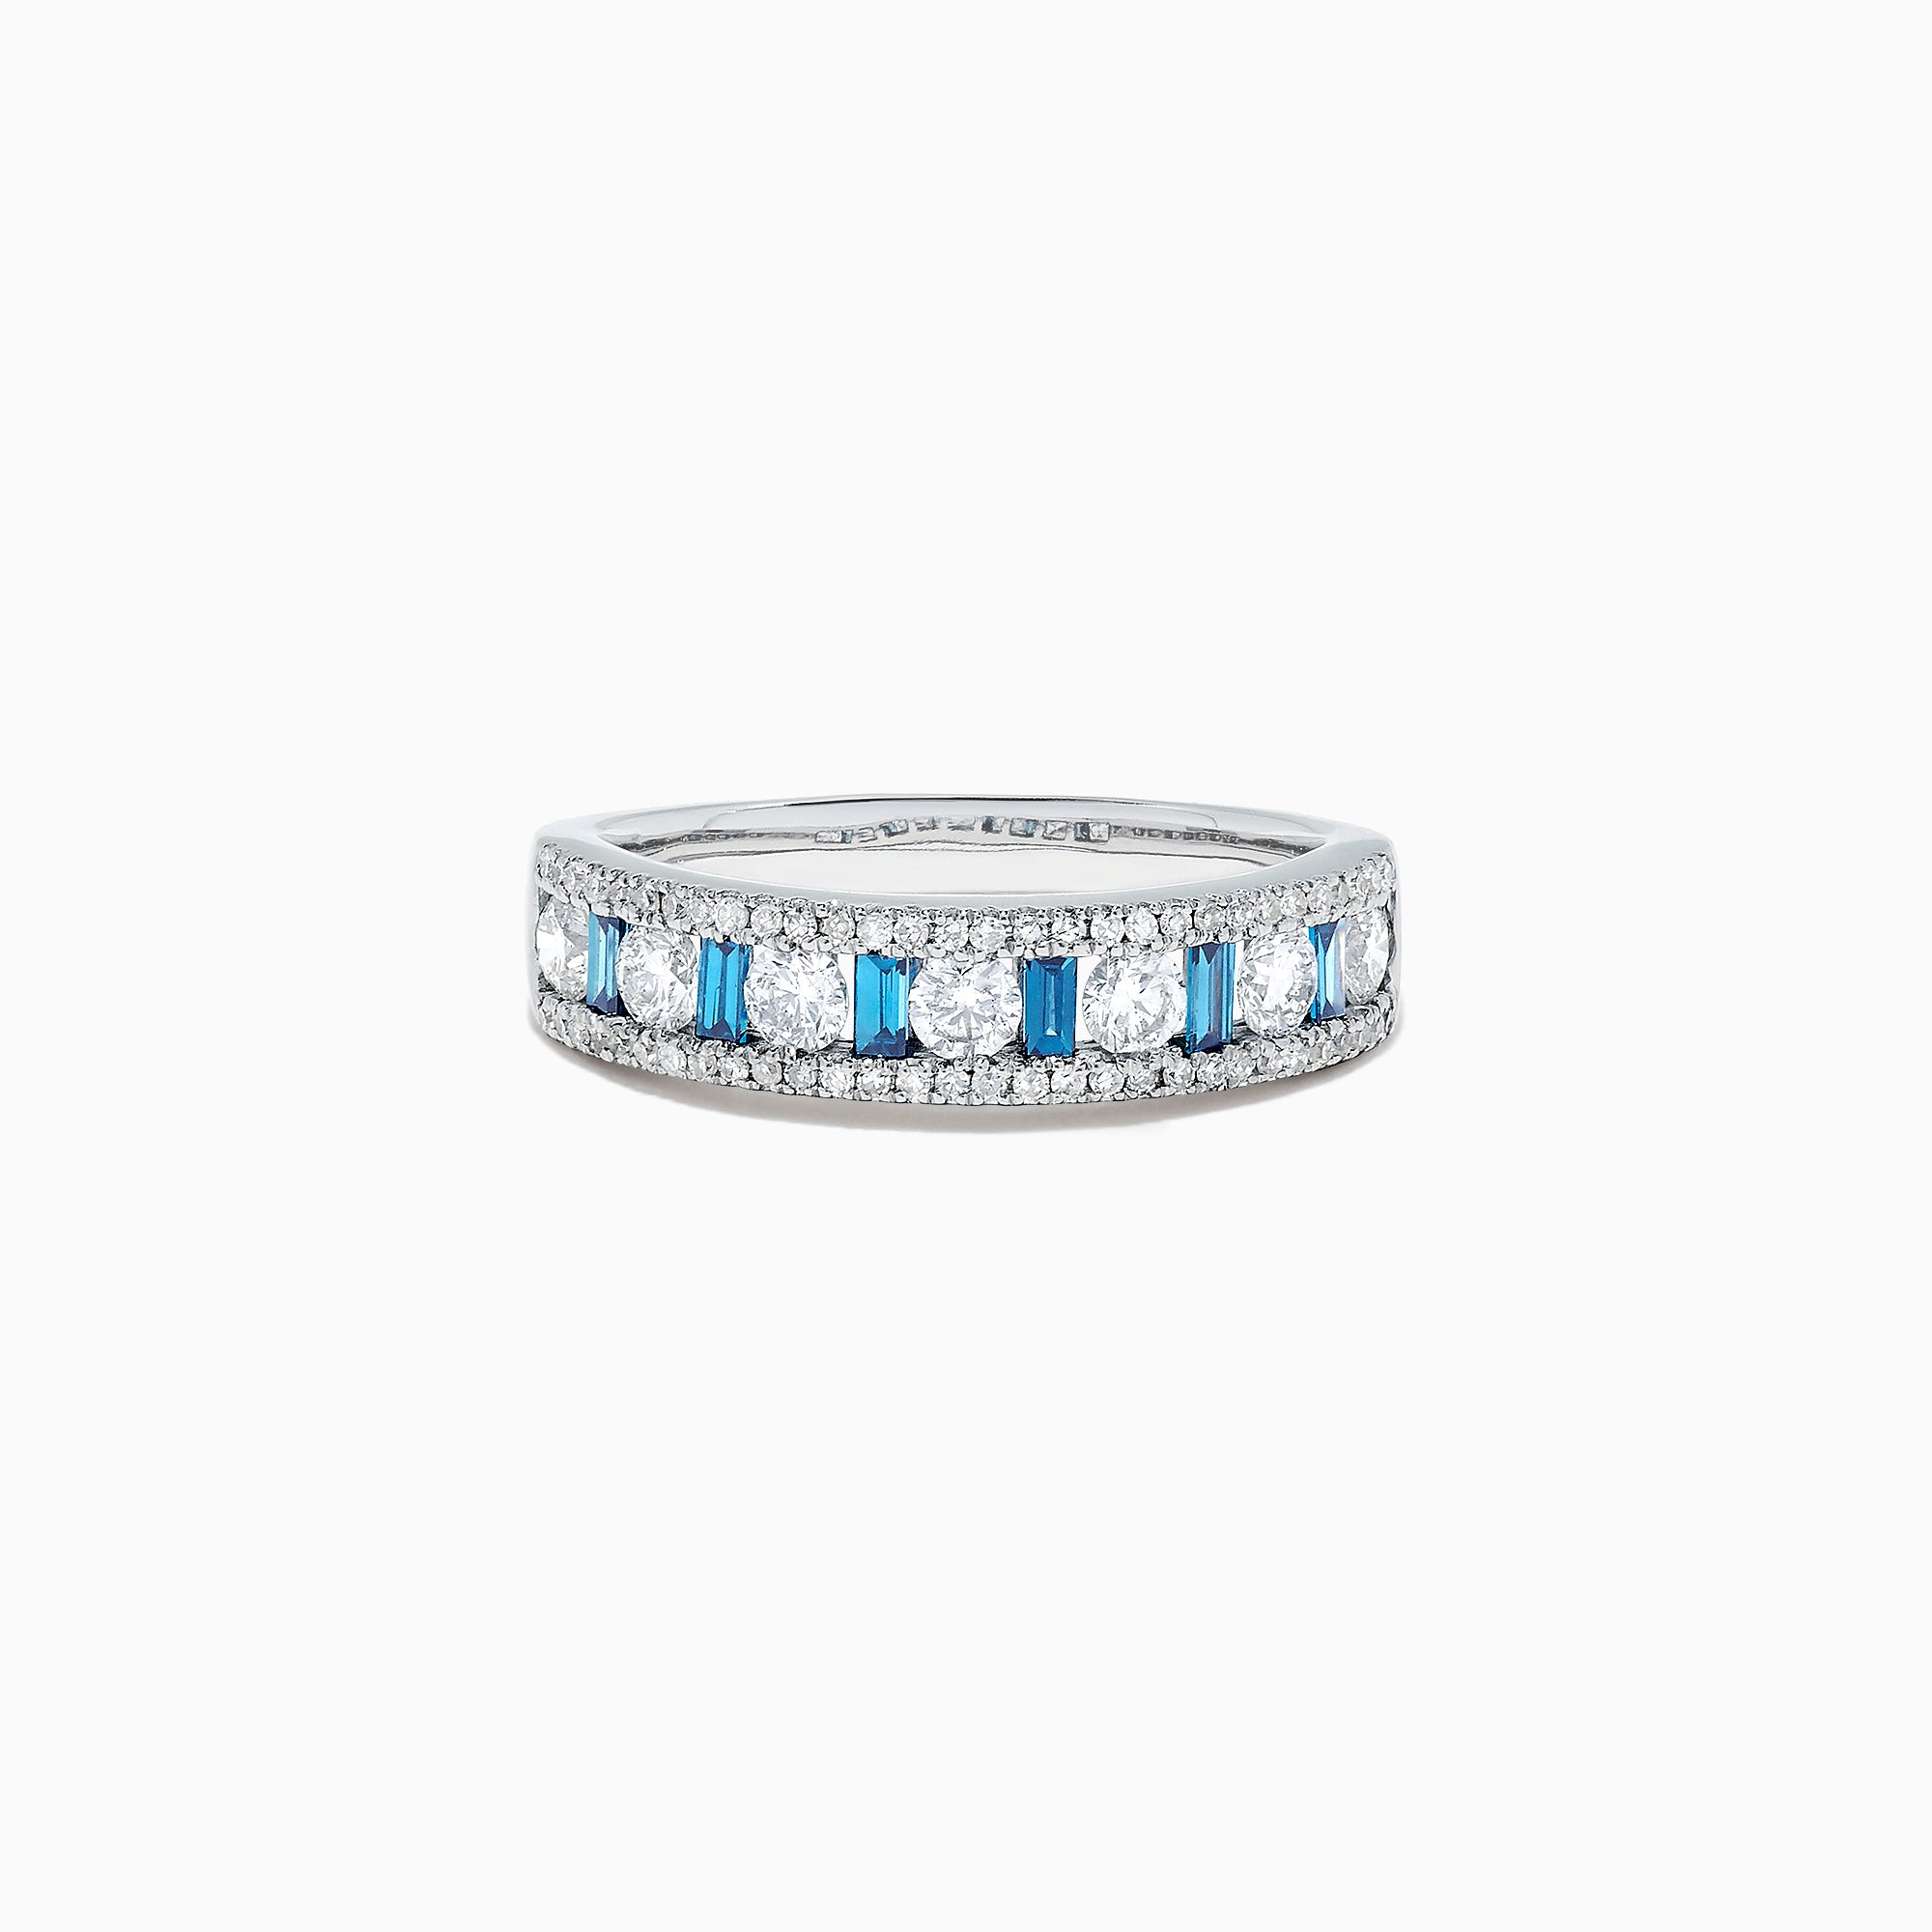 Effy Bella Bleu 14K White Gold Blue and White Diamond Ring, 0.97 TCW